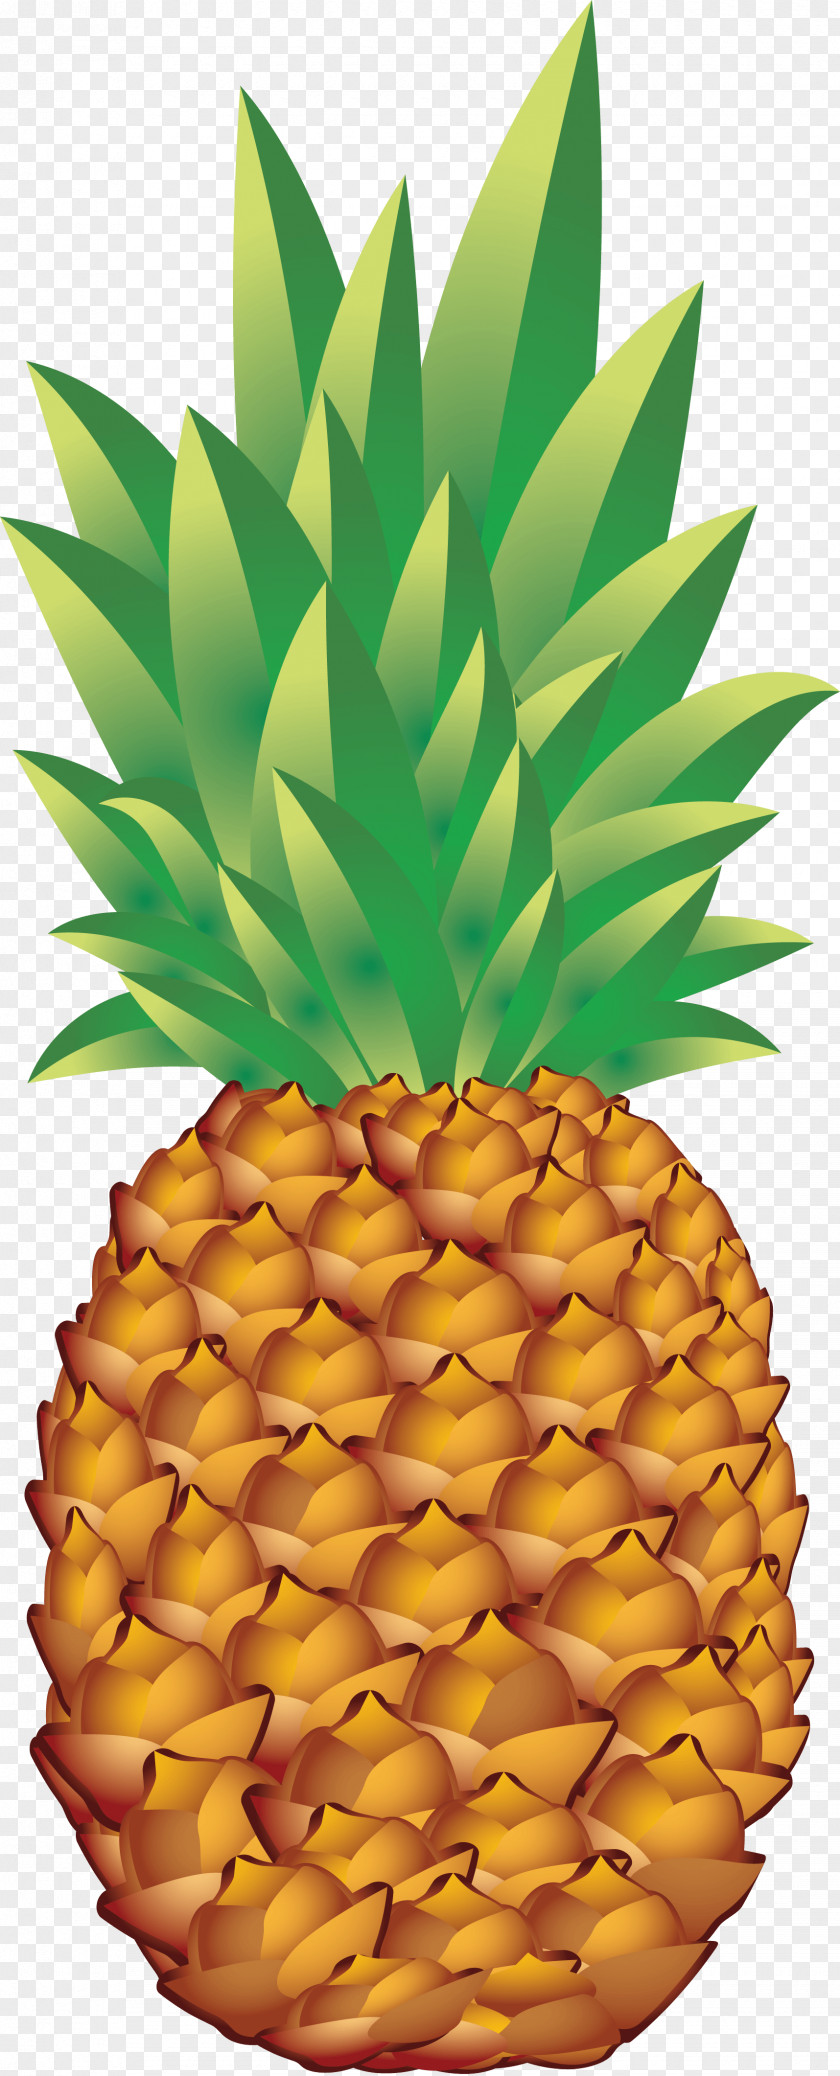 Pineapple Image Download Juice Fruit PNG